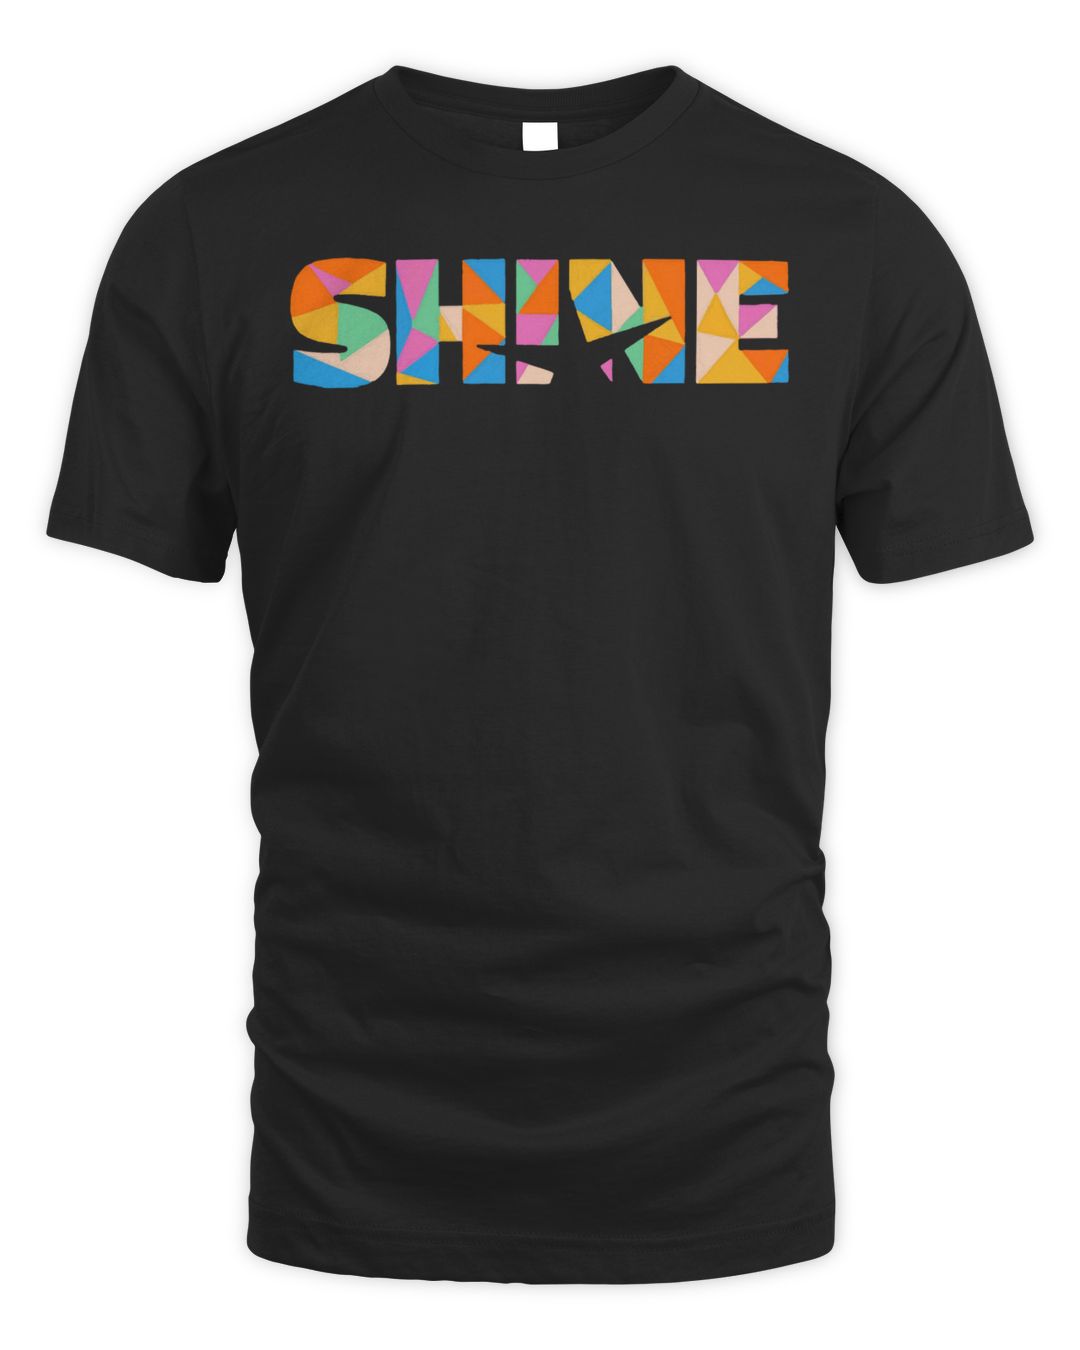 The Trevor Project Merch Shine Shirt